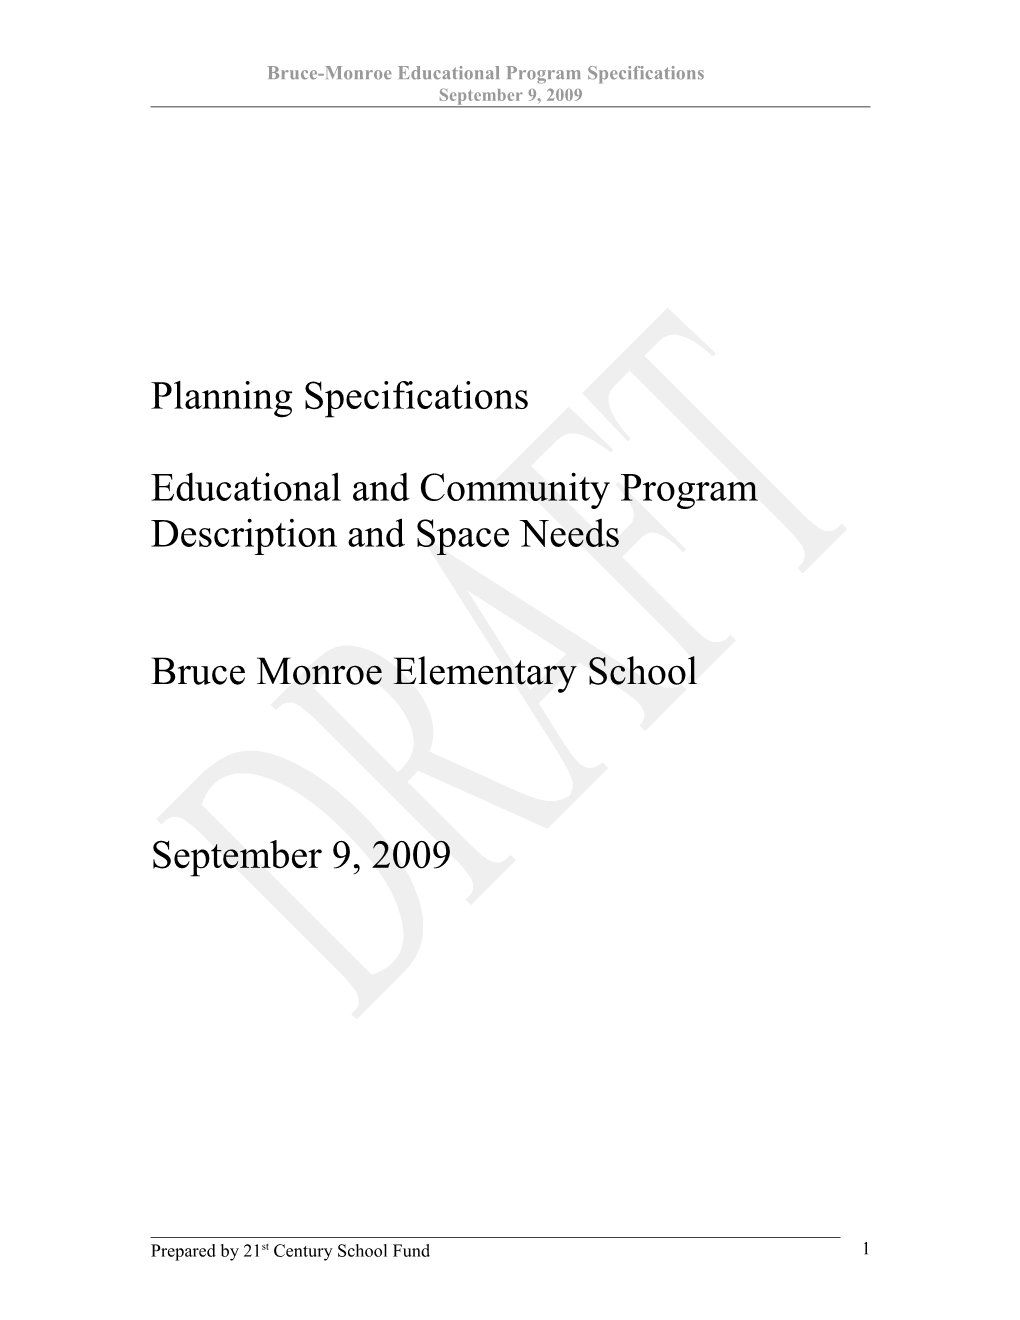 Bruce Monroe Elementary School Planning Specs Sep2009